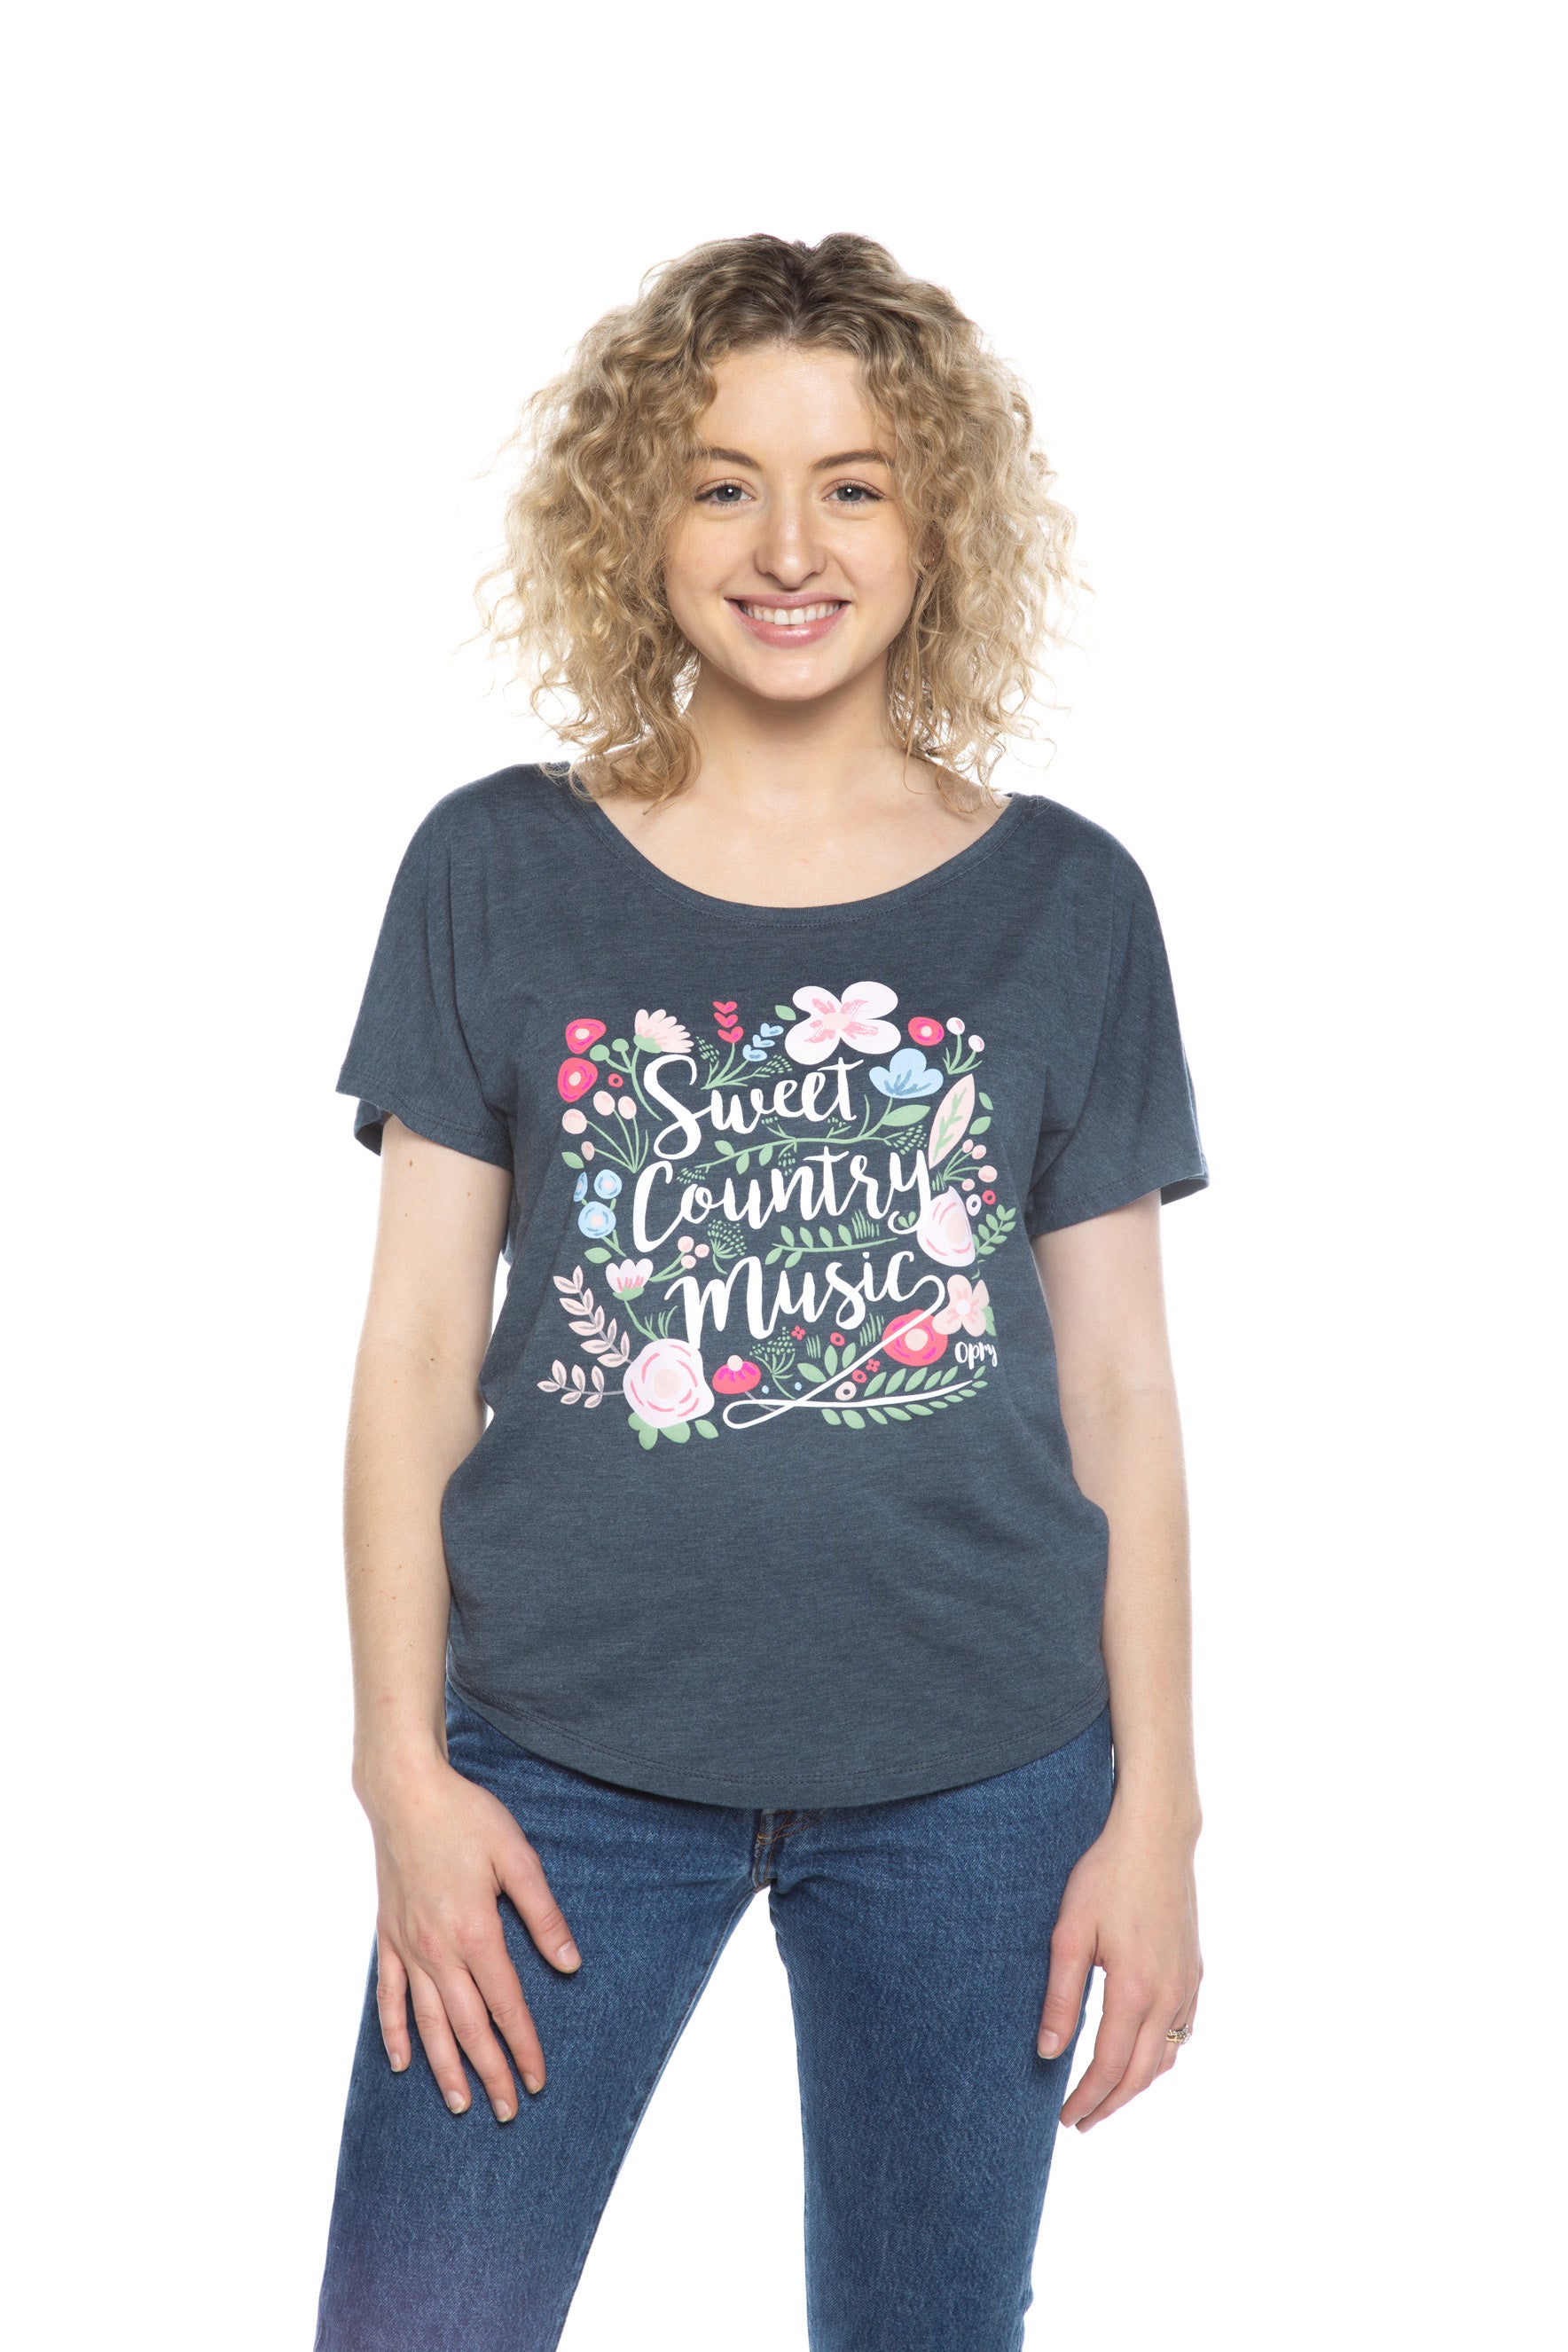 Opry Women's Sweet Country Music T-Shirt